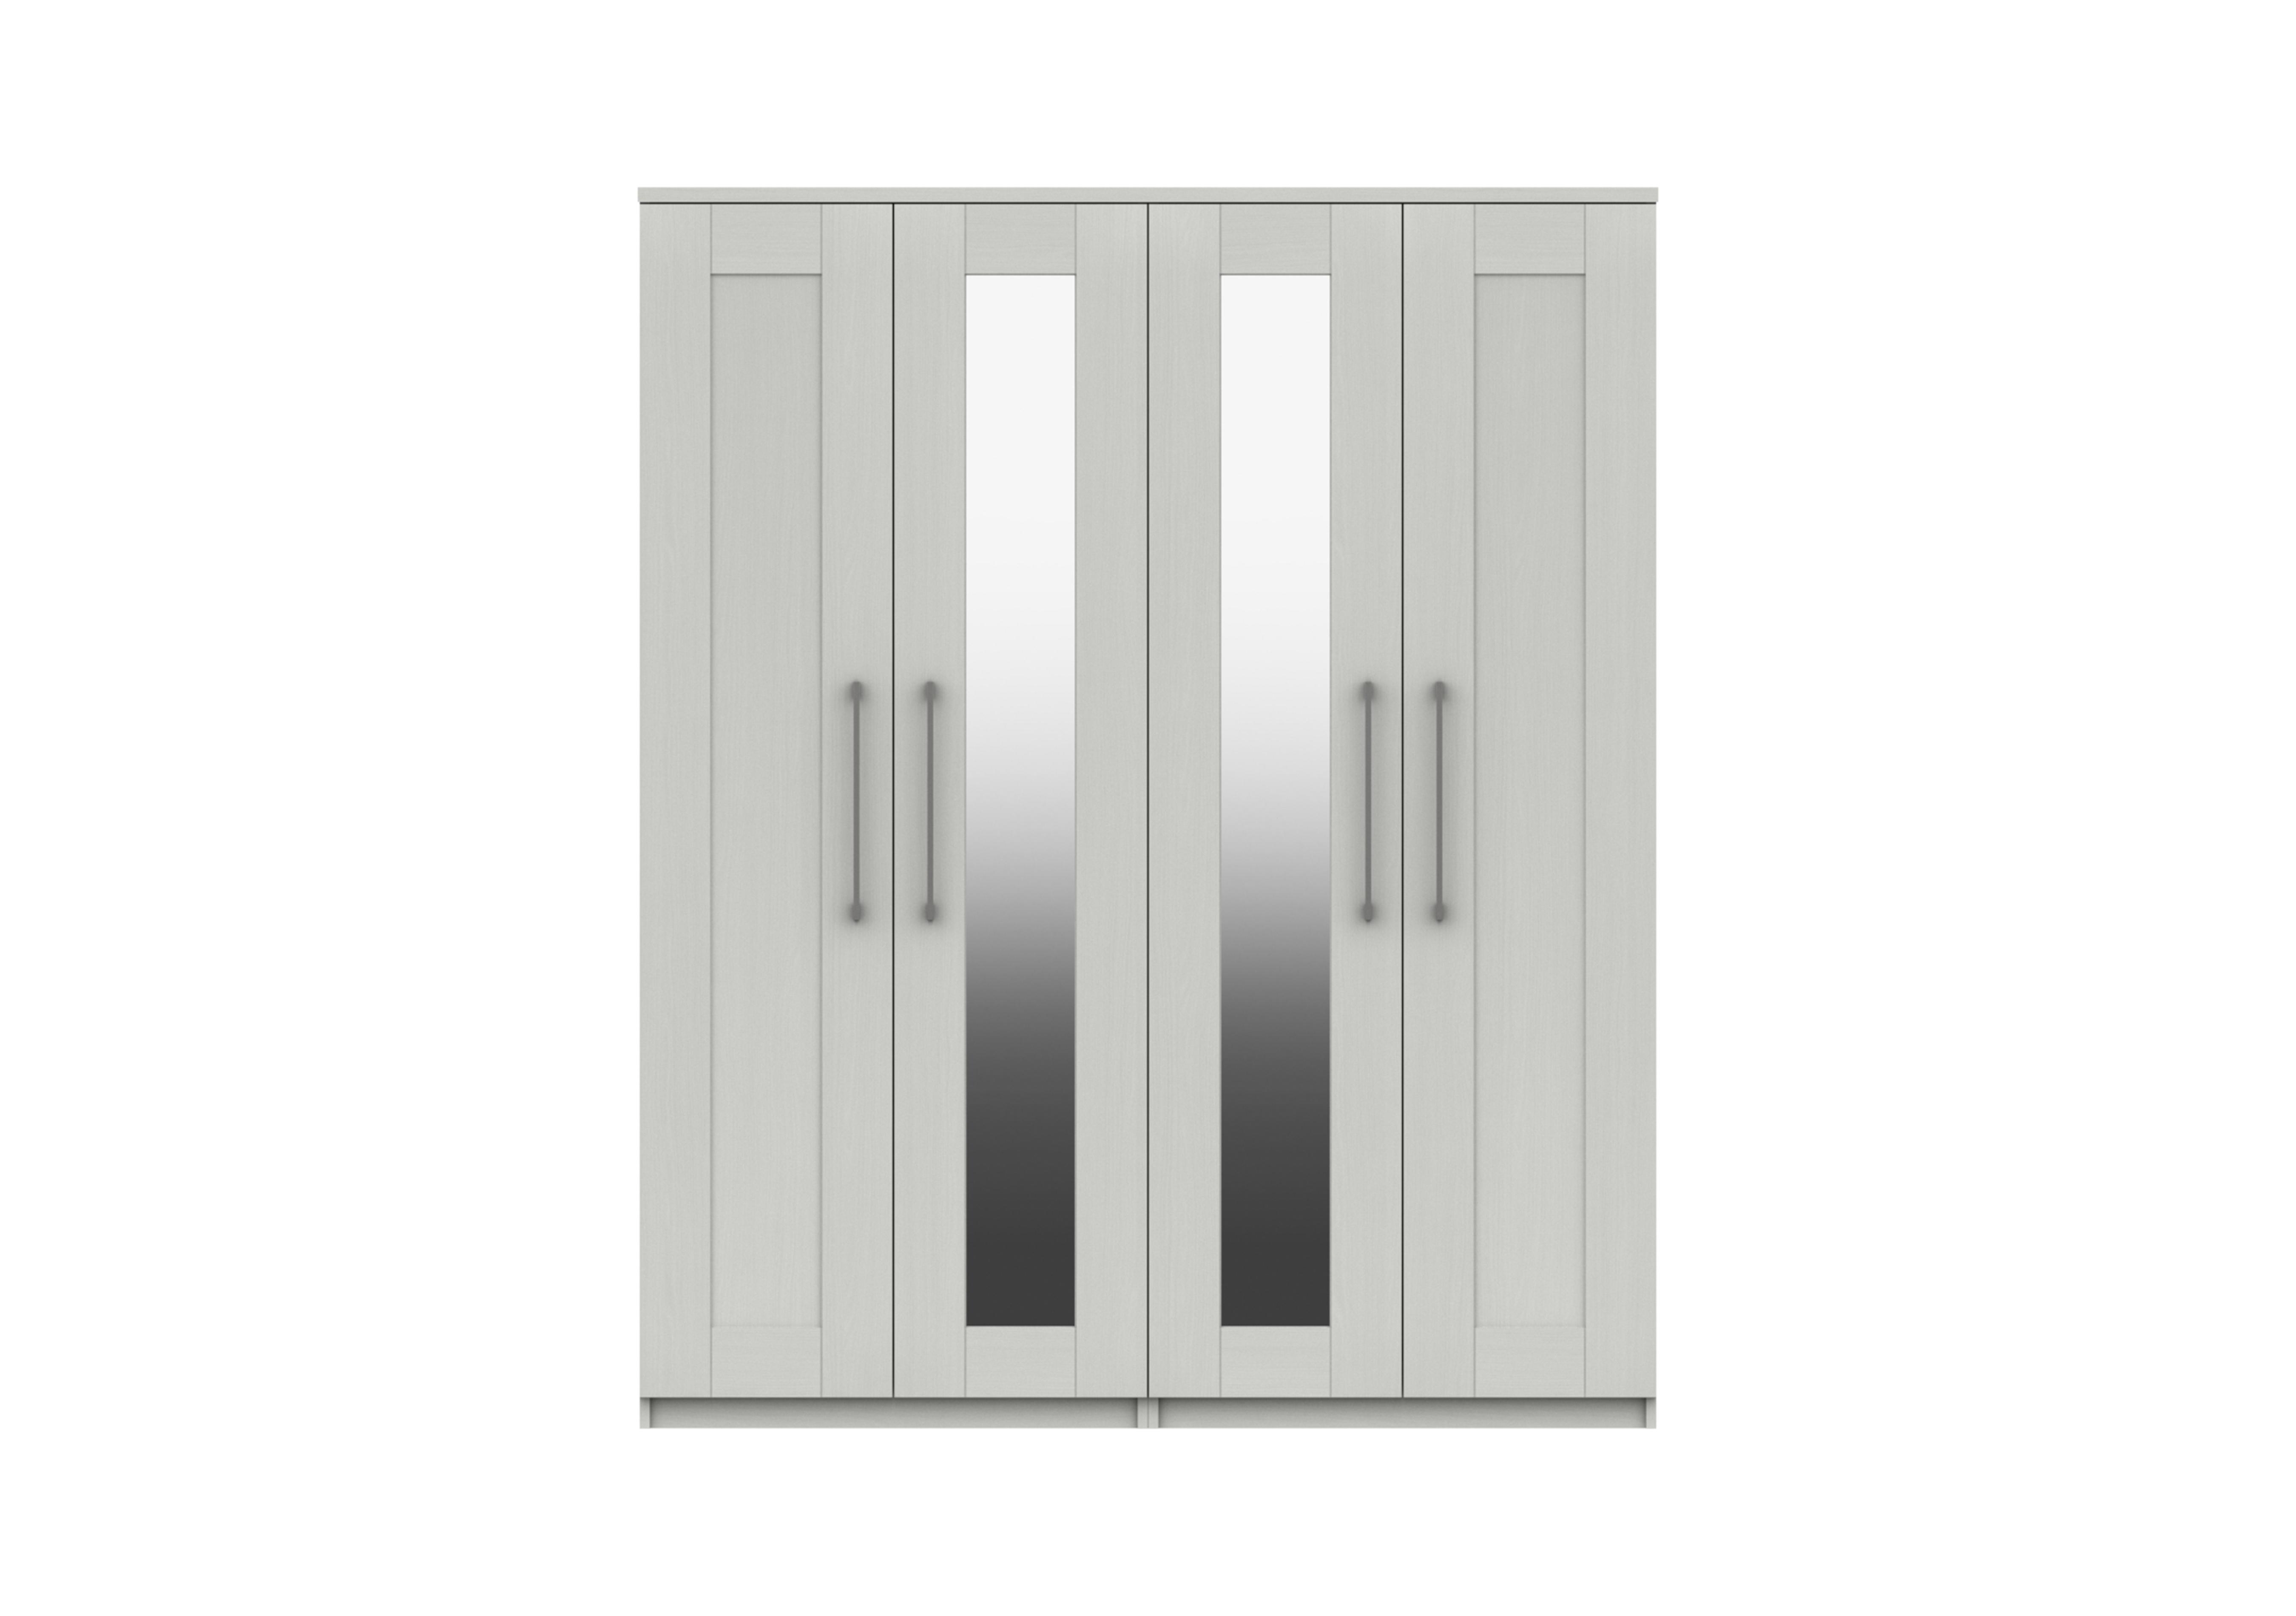 Fenchurch 4 Door Wardrobe with Mirrors in White on Furniture Village